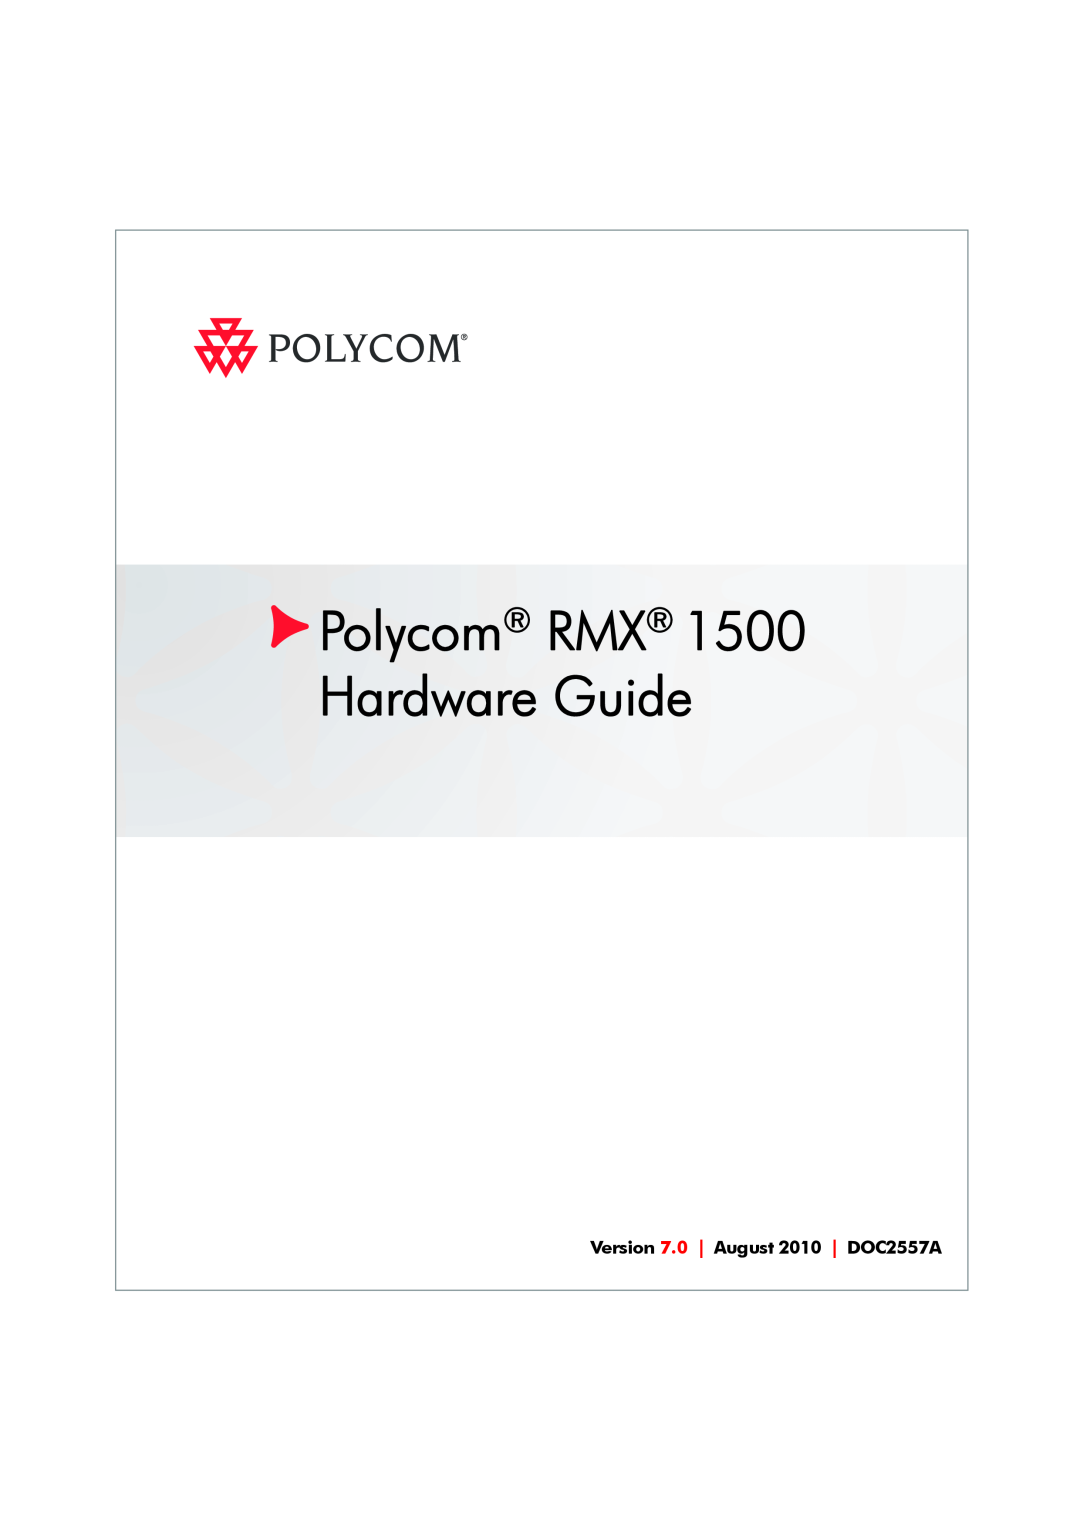 Polycom manual Version 7.0 August 2010 DOC2557A, Polycom RMX 1500 Hardware Guide 